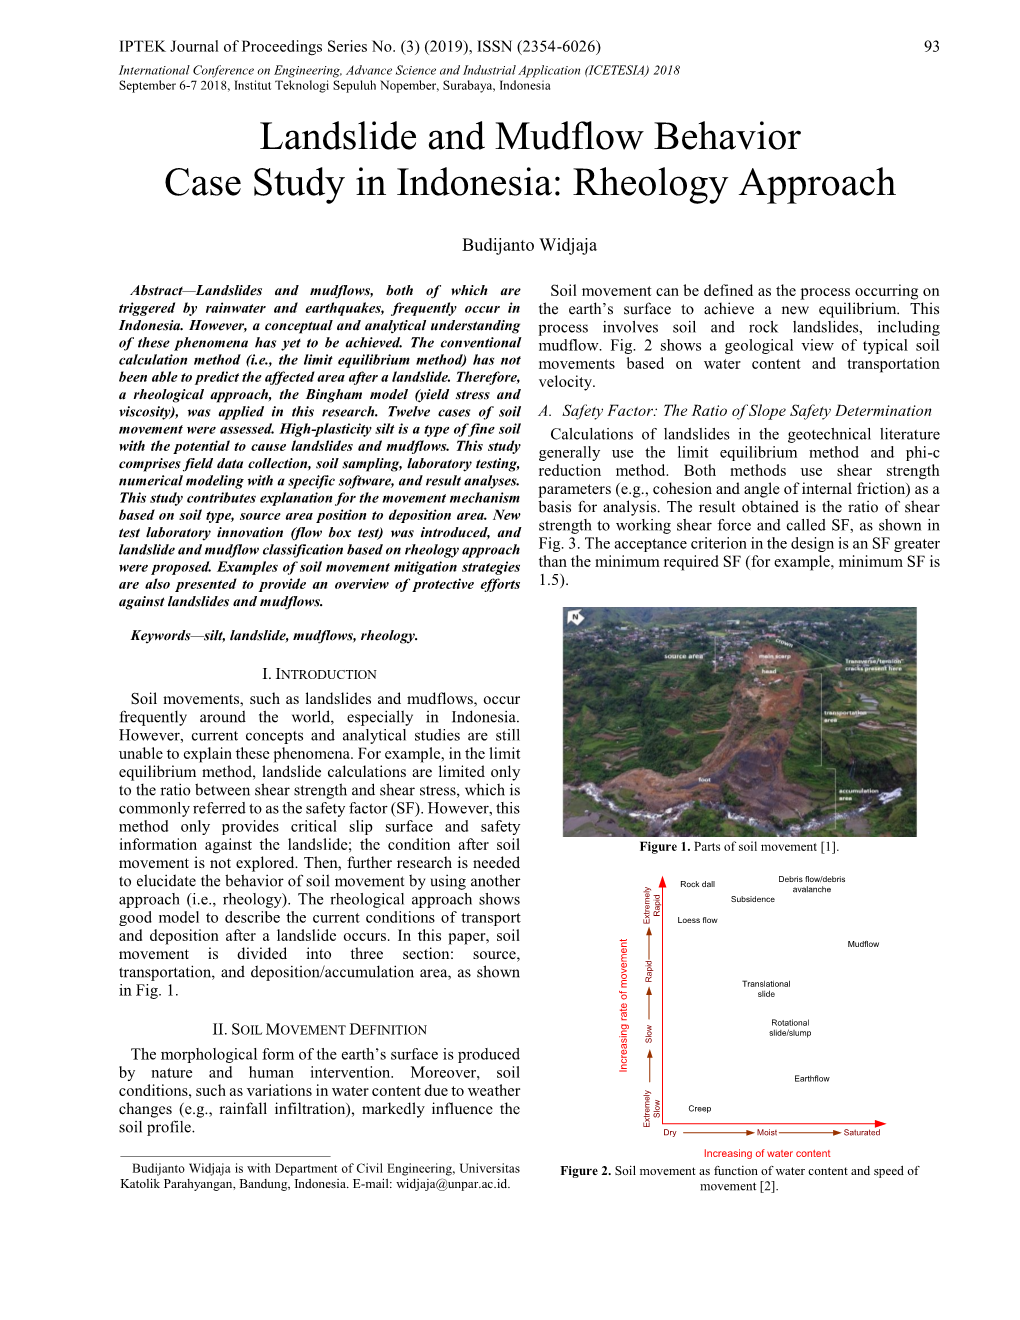 Landslide and Mudflow Behavior Case Study in Indonesia: Rheology Approach